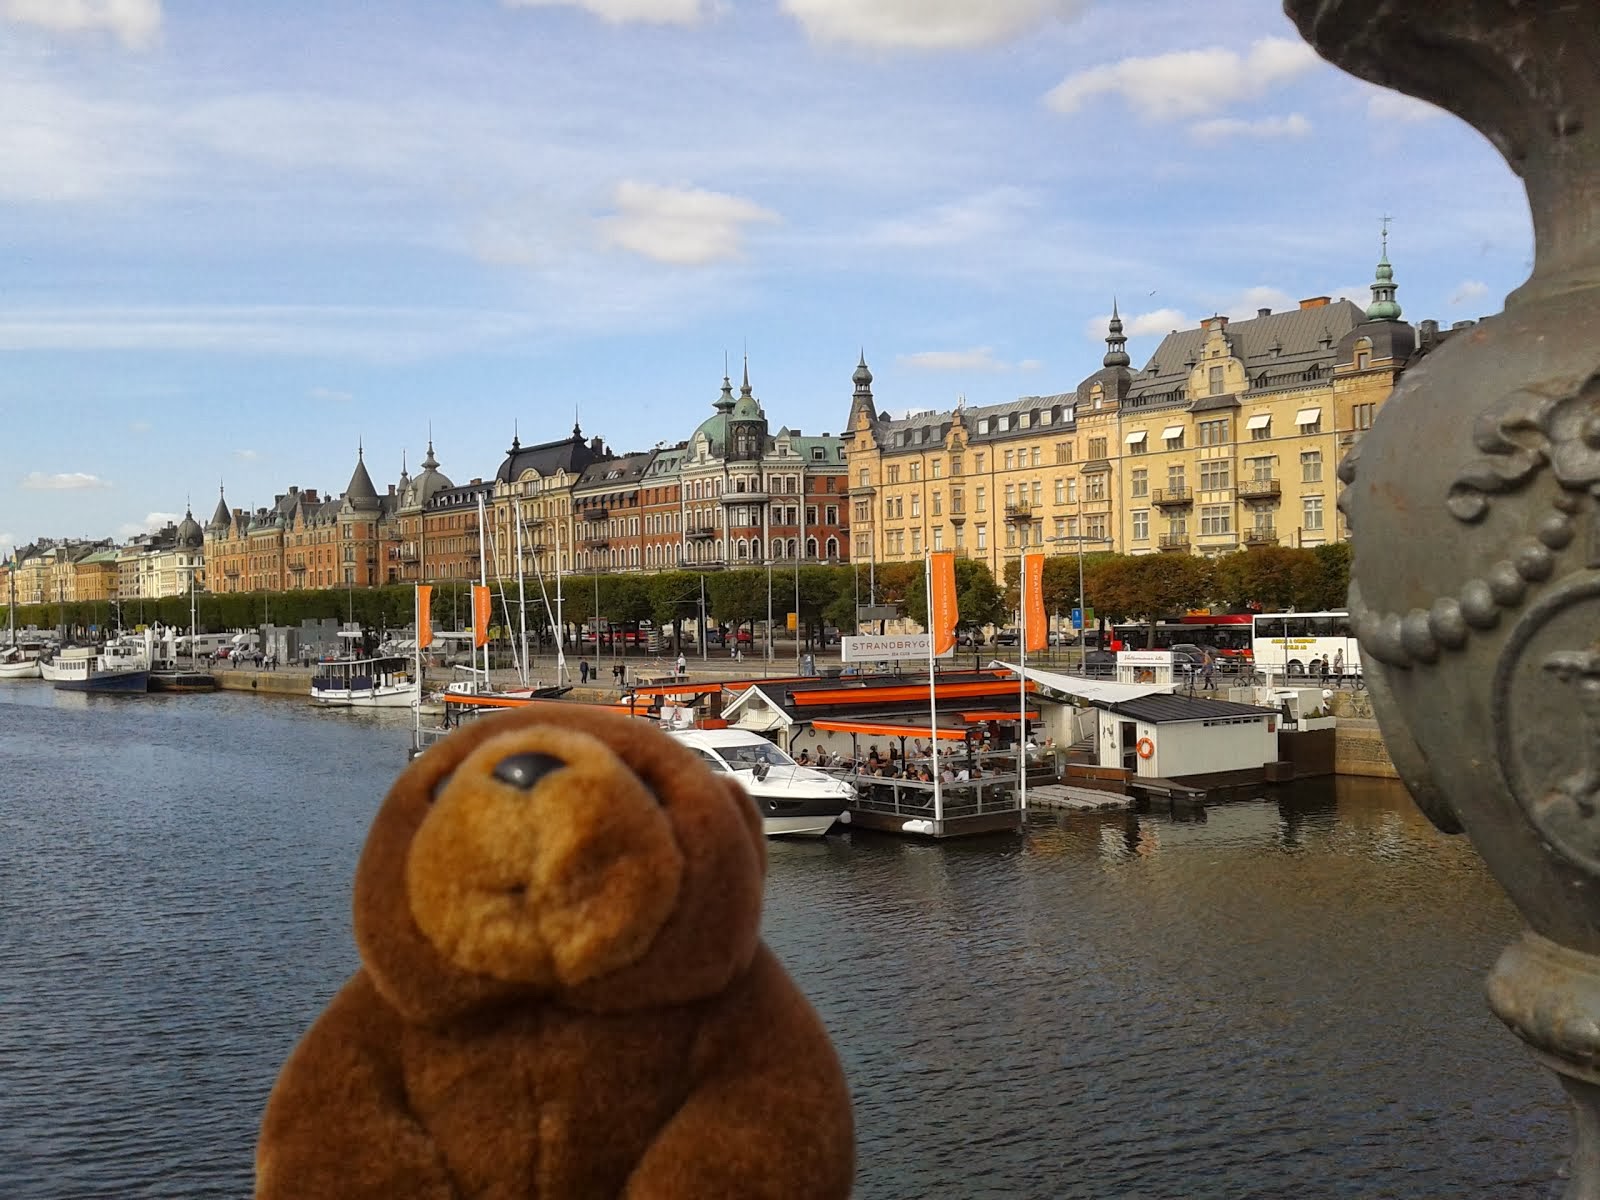 Teddy Bear in Stockholm